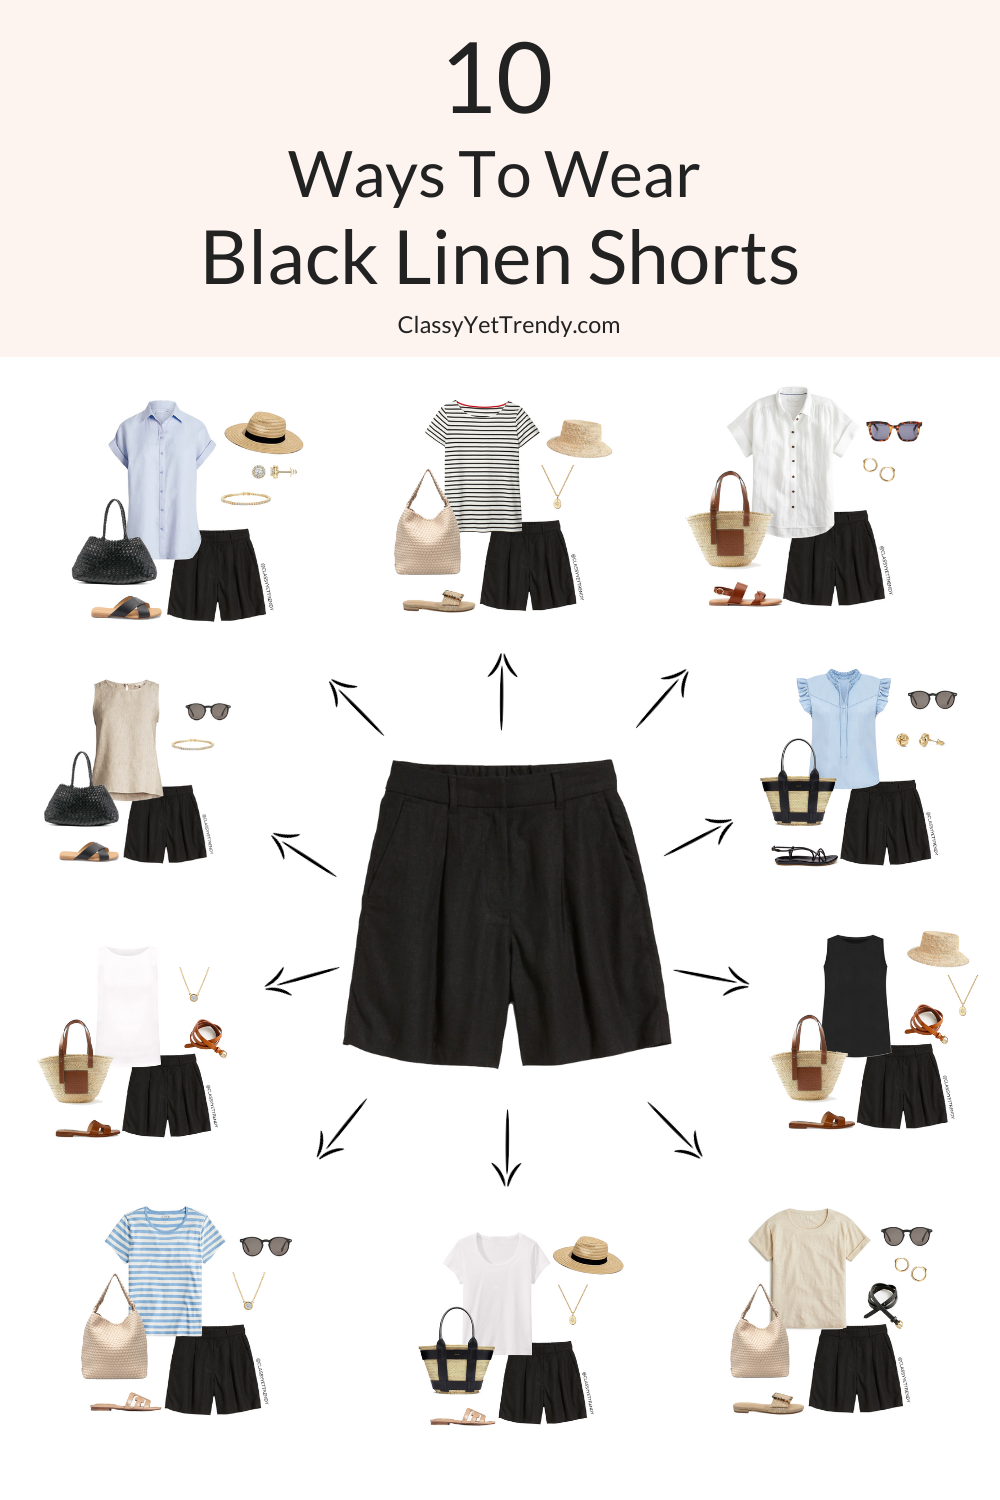 10 Ways To Wear Black Linen Shorts